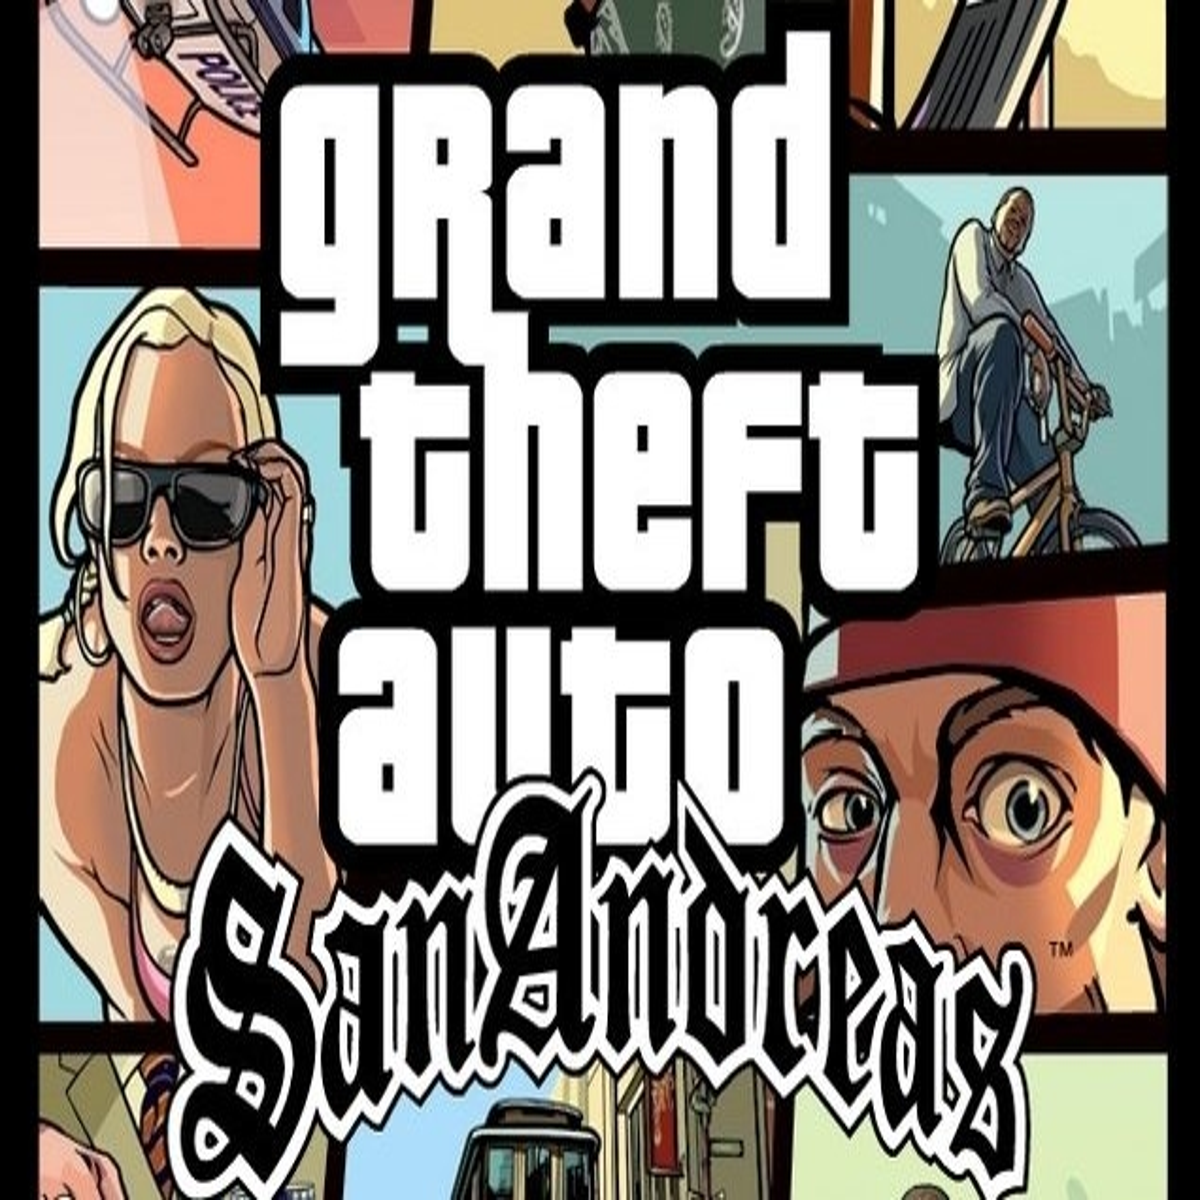 Rockstar lança GTA: San Andreas na Xbox 360